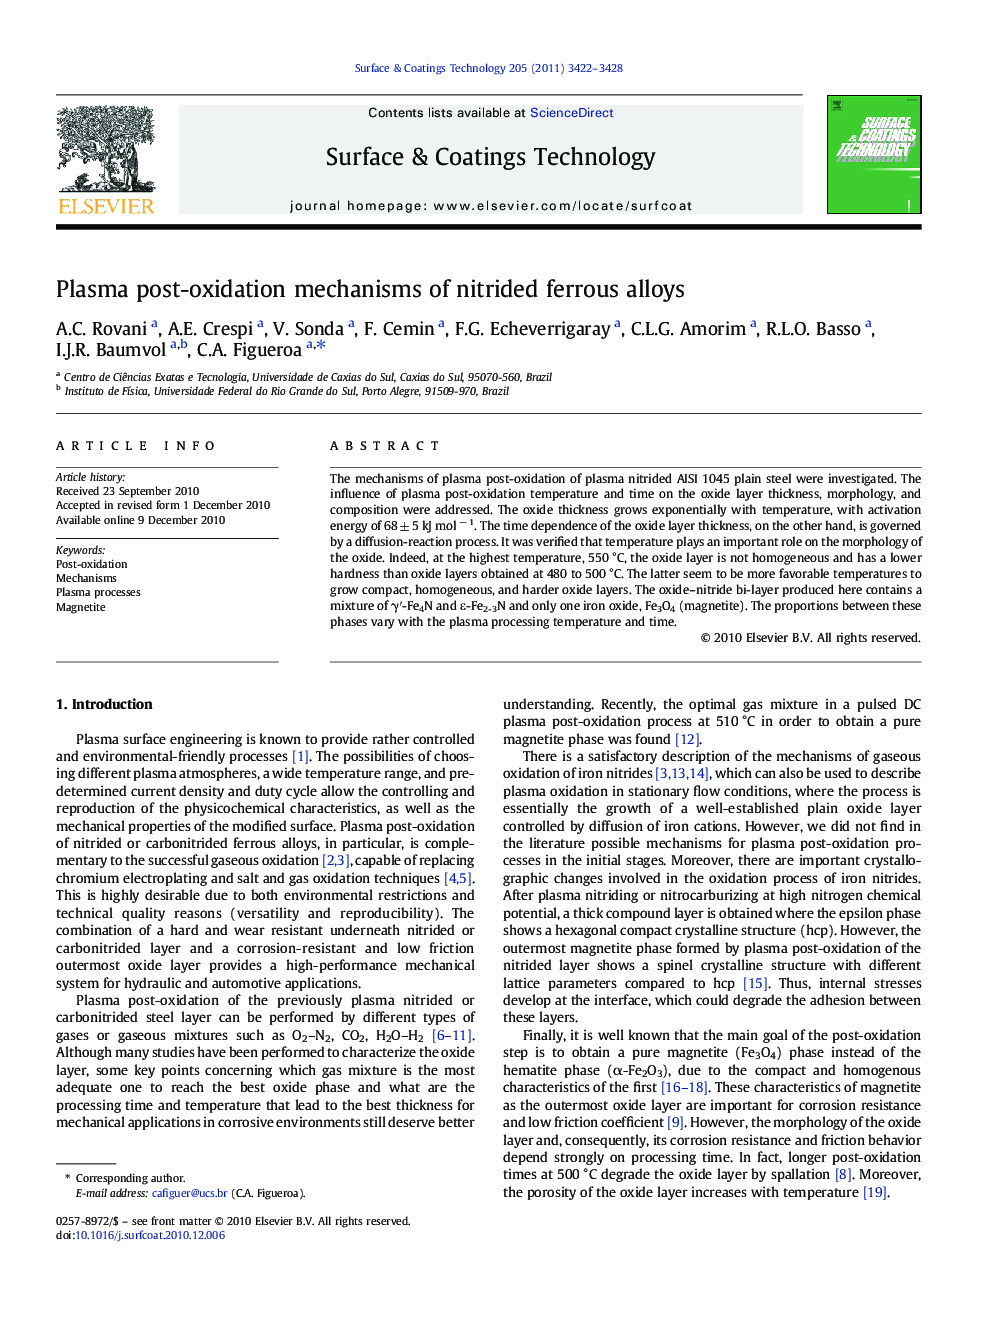 Plasma post-oxidation mechanisms of nitrided ferrous alloys